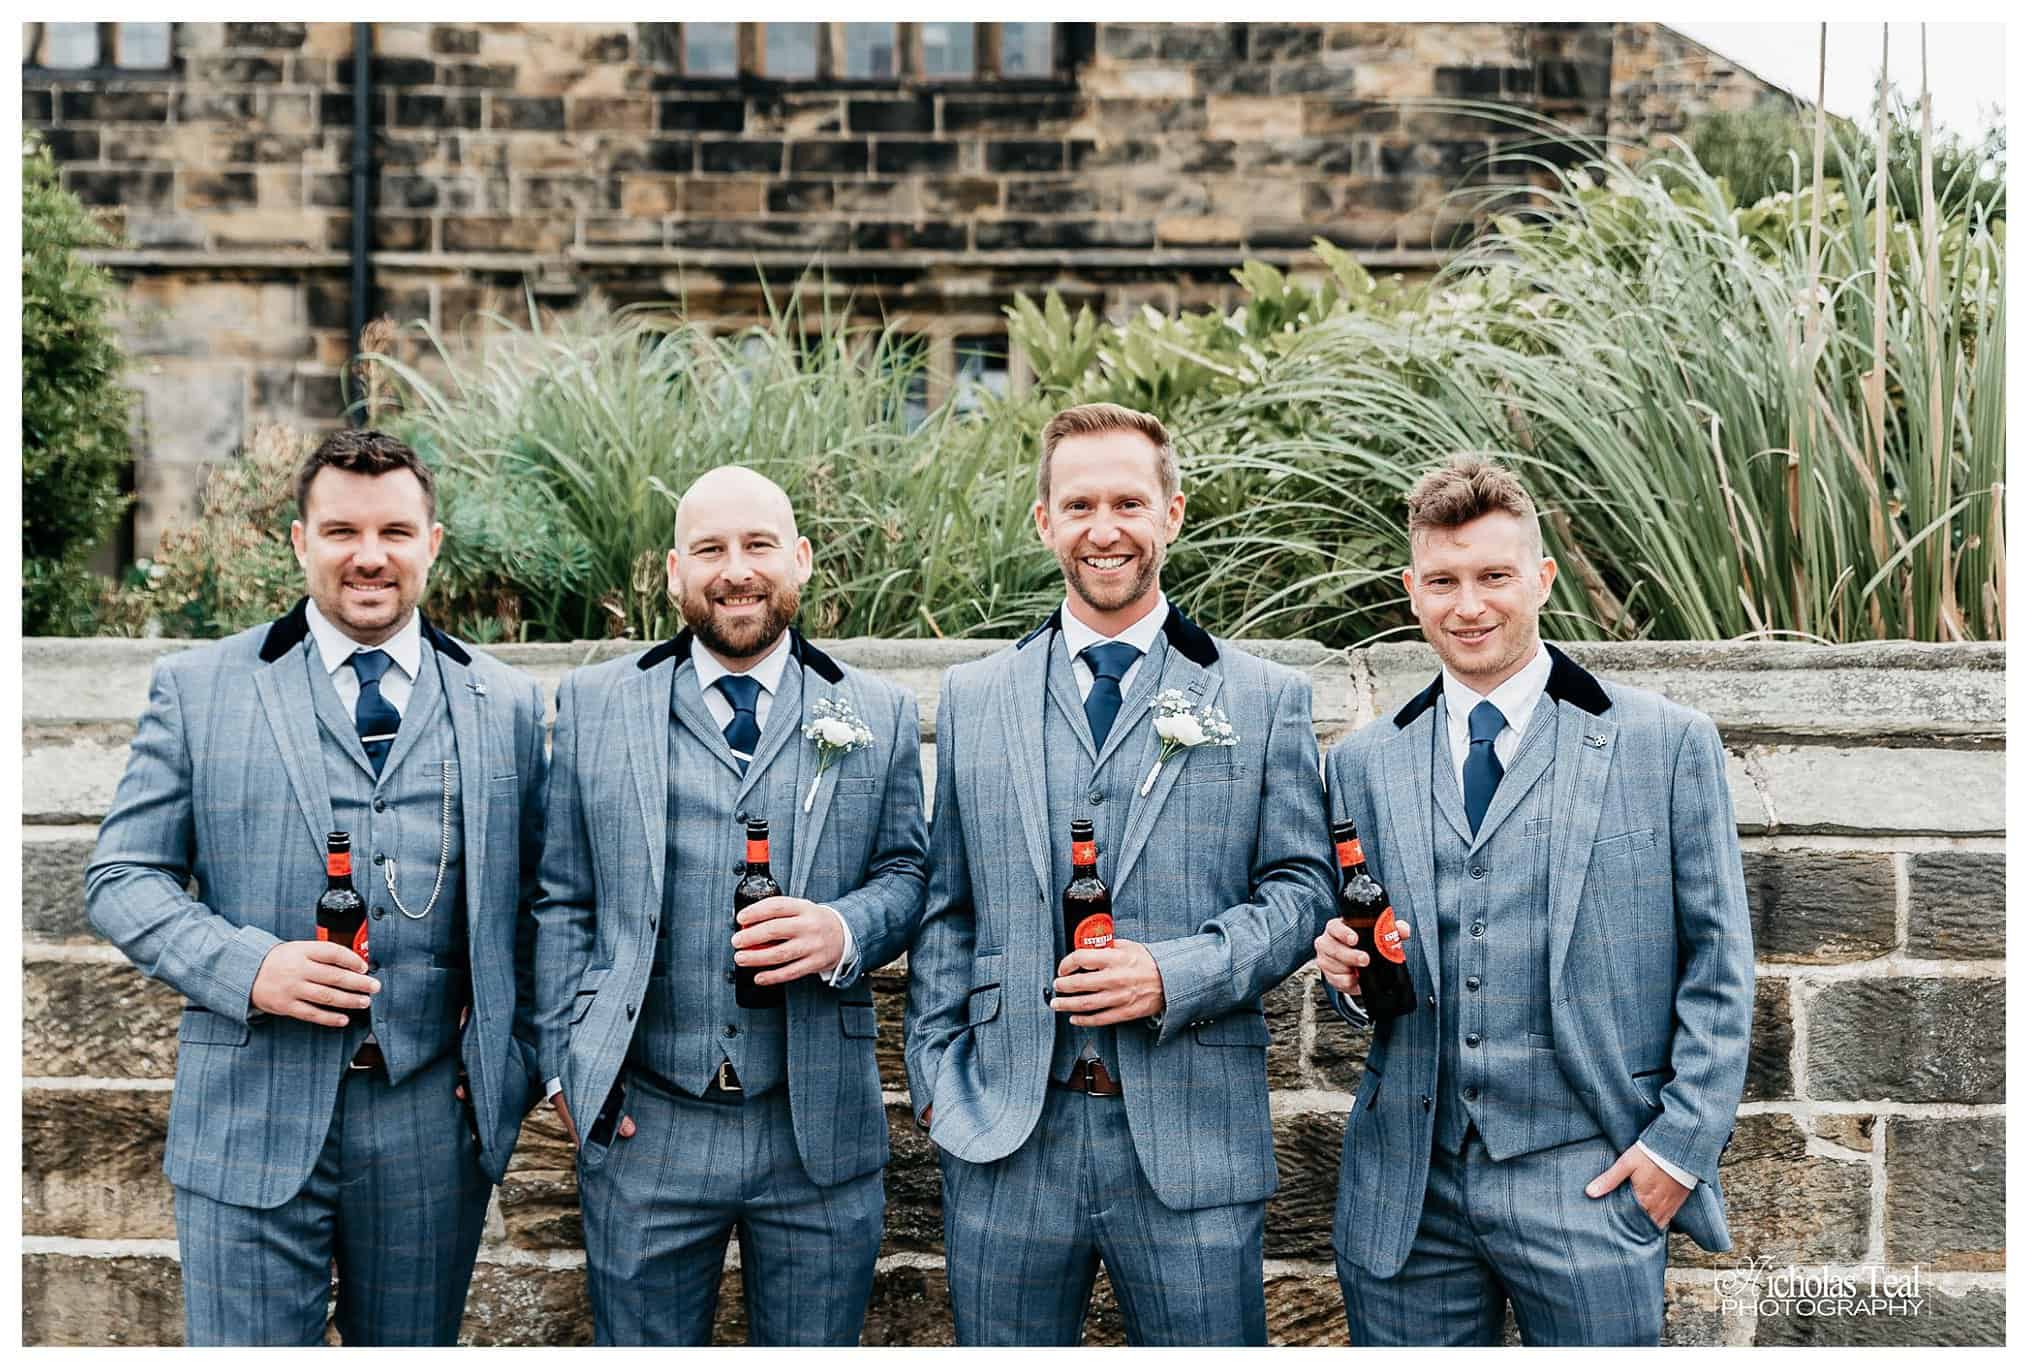 Groomes x 4 posing with beers in hand Oakwell Hall Batley , Oakwell hall Wedding Photos, Oakwell Hall Wedding Photographer